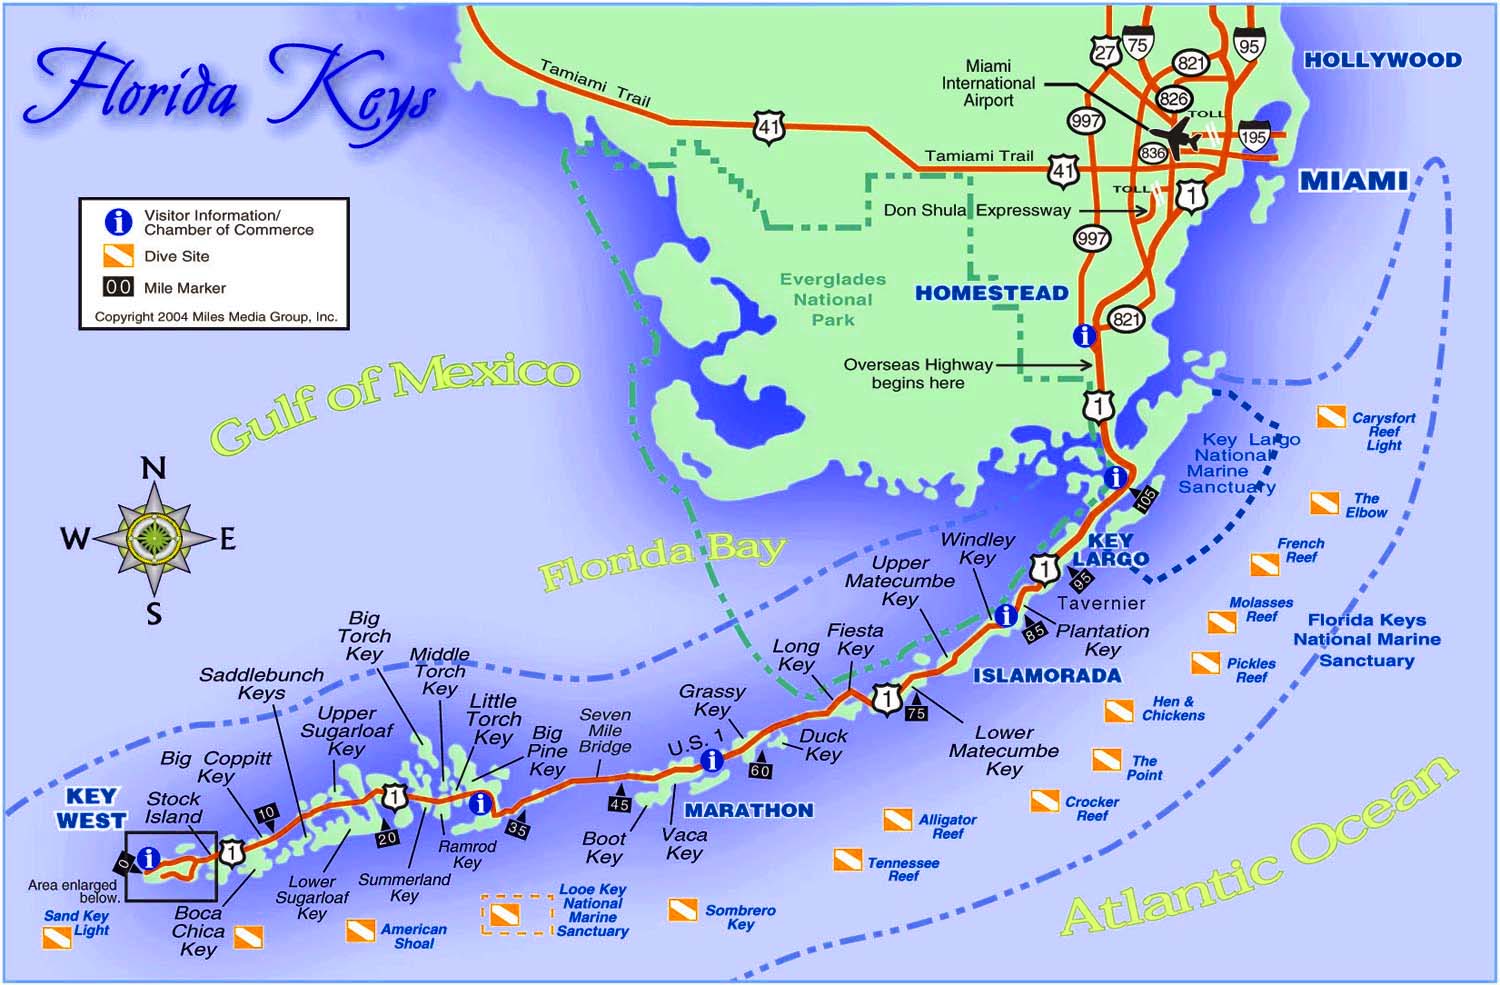 Map of the Florida Keys used at Bayside Inn Key Largo